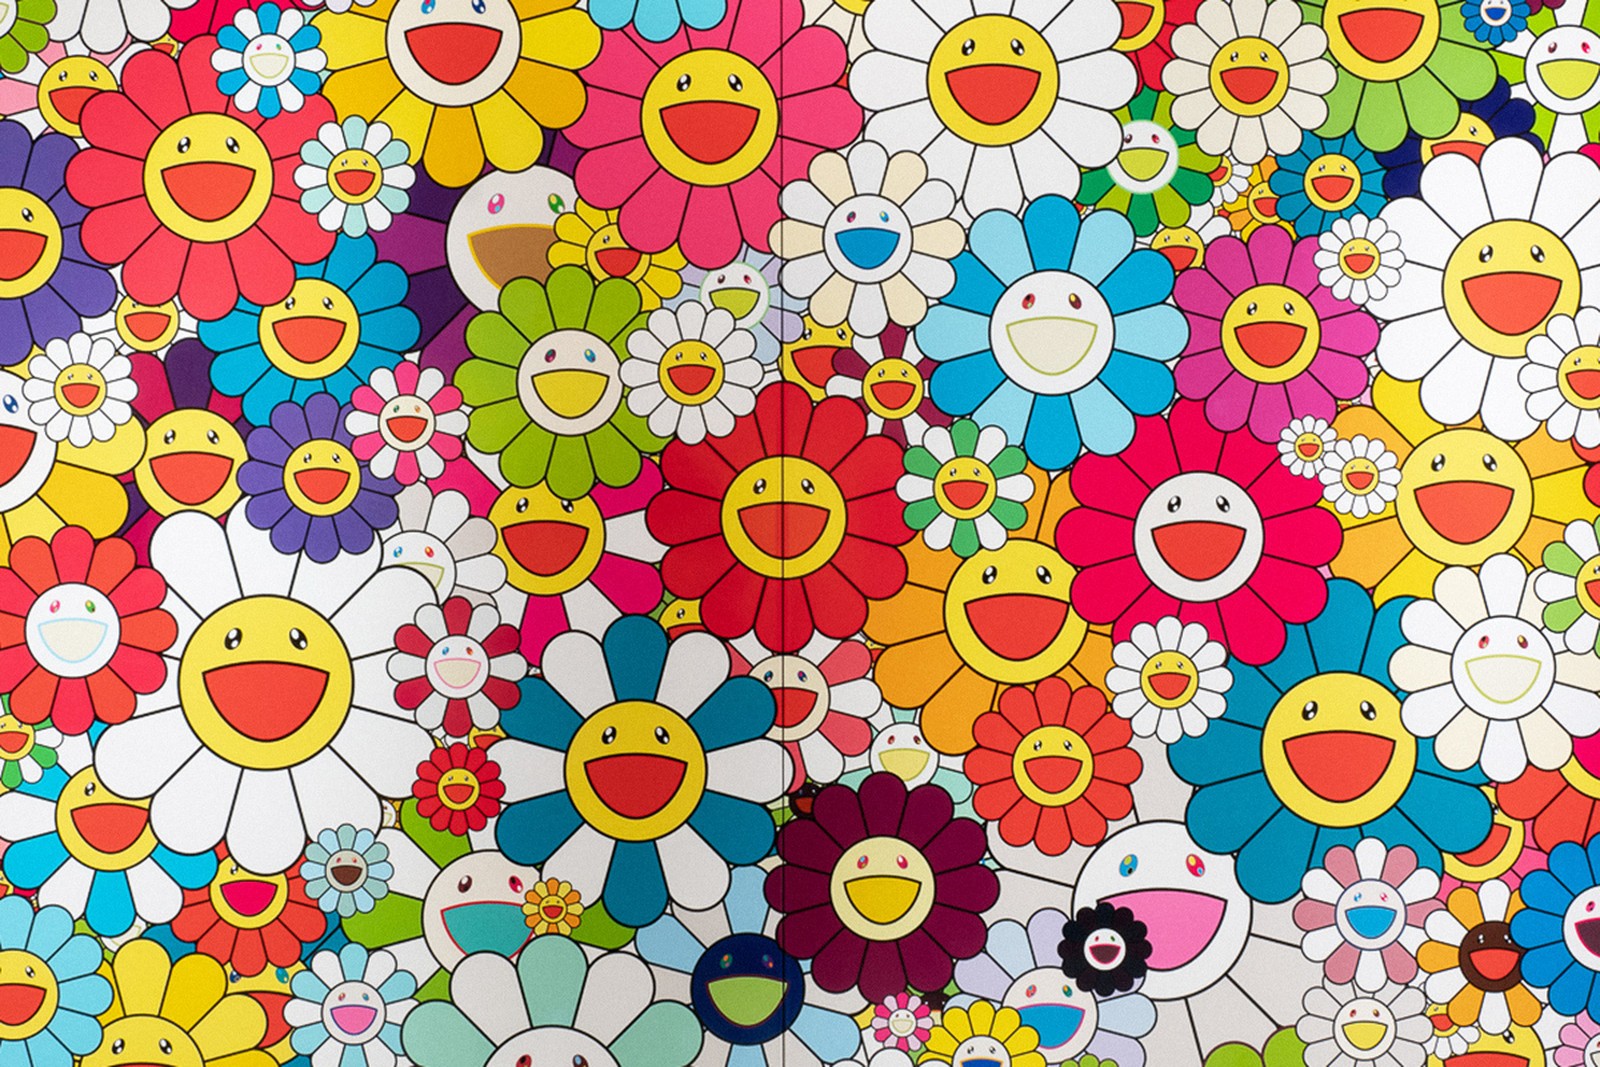 TAKASHI MURAKAMI'S FLOWERS: A CORE SYMBOL OF POP CULTURE - Culted